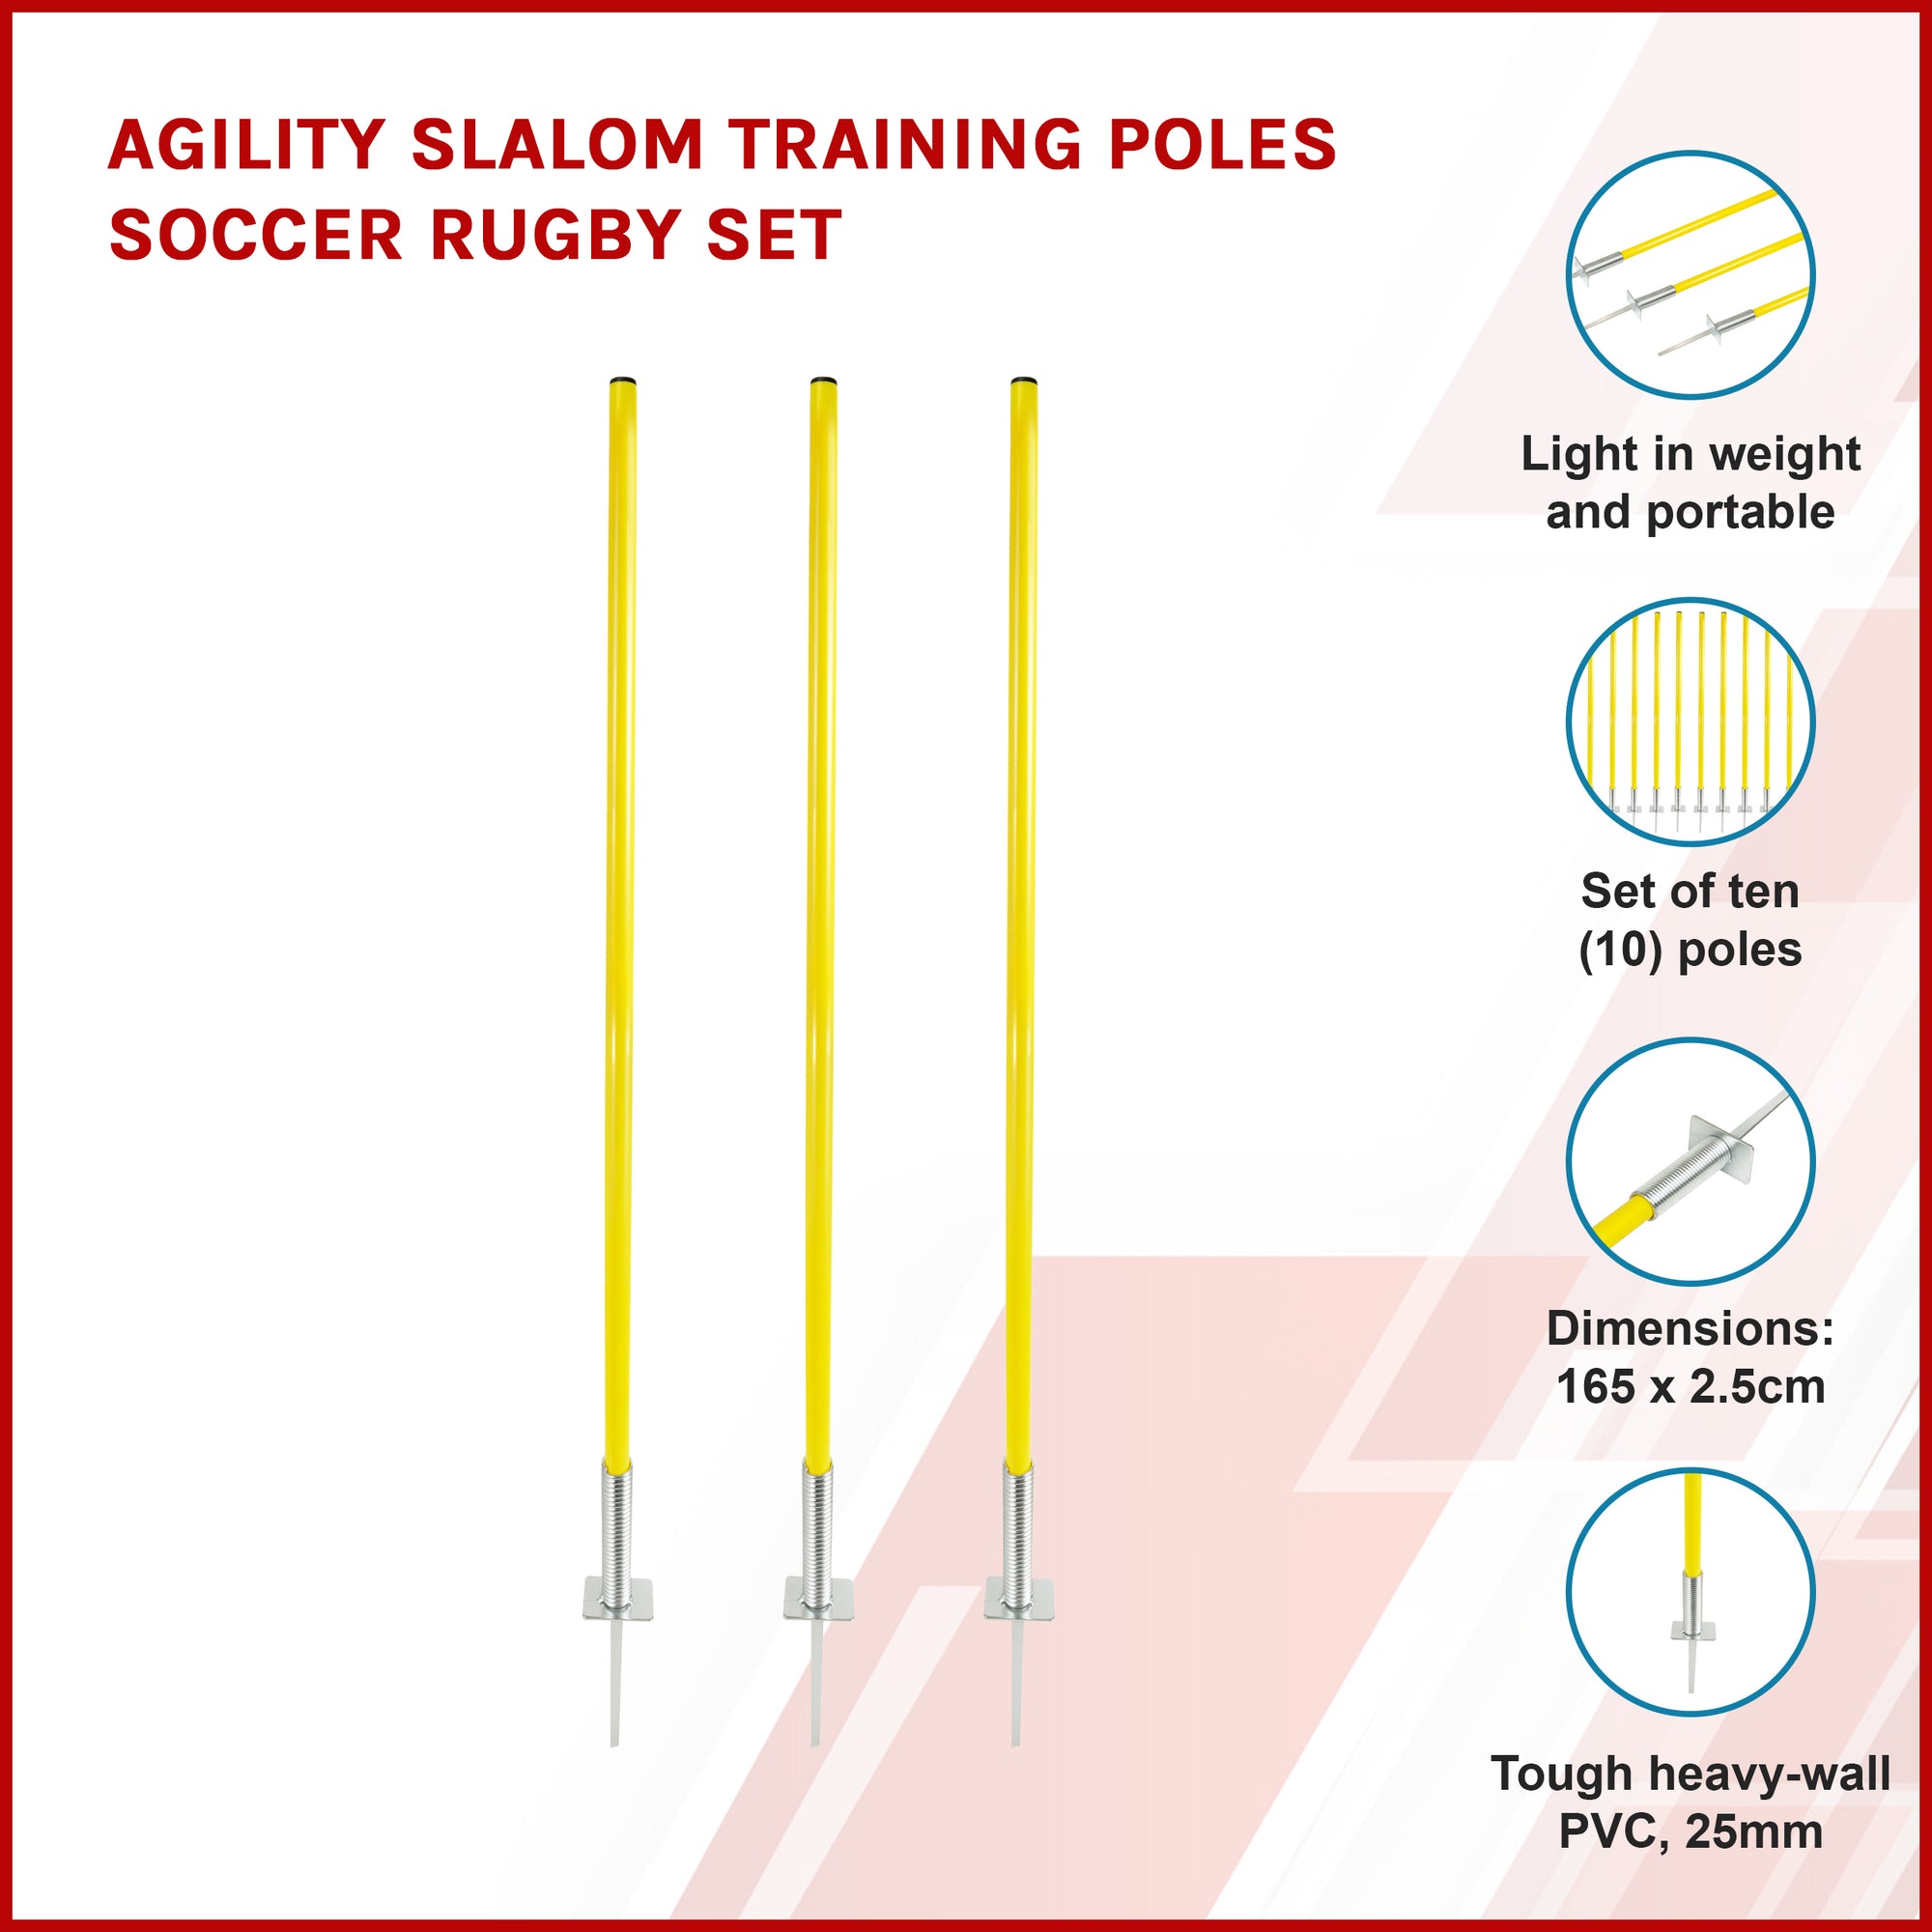 Agility Slalom Training Poles Soccer Rugby Set